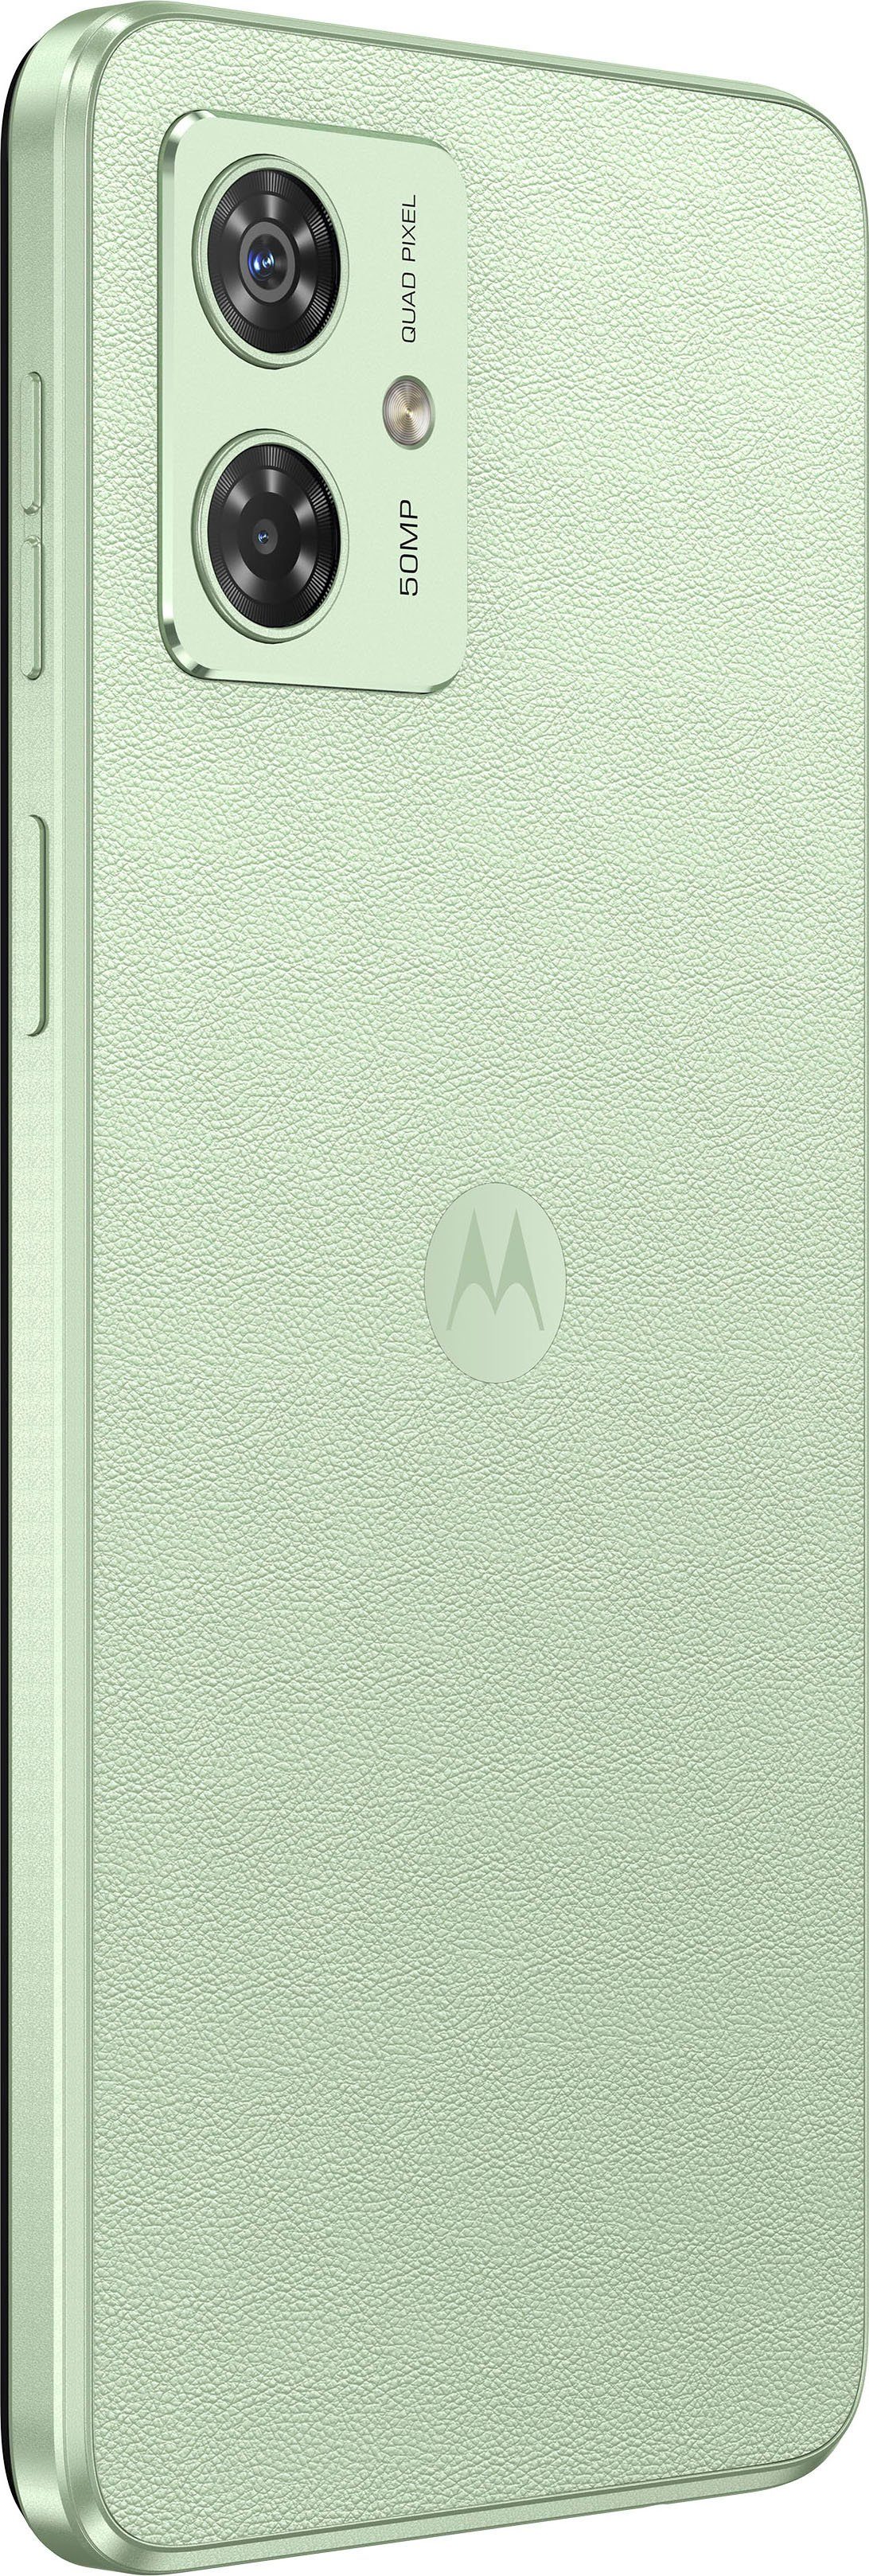 GB cm/6,5 Zoll, 50 256 Speicherplatz, g54 grün Smartphone mint moto Motorola Kamera) (16,51 MP